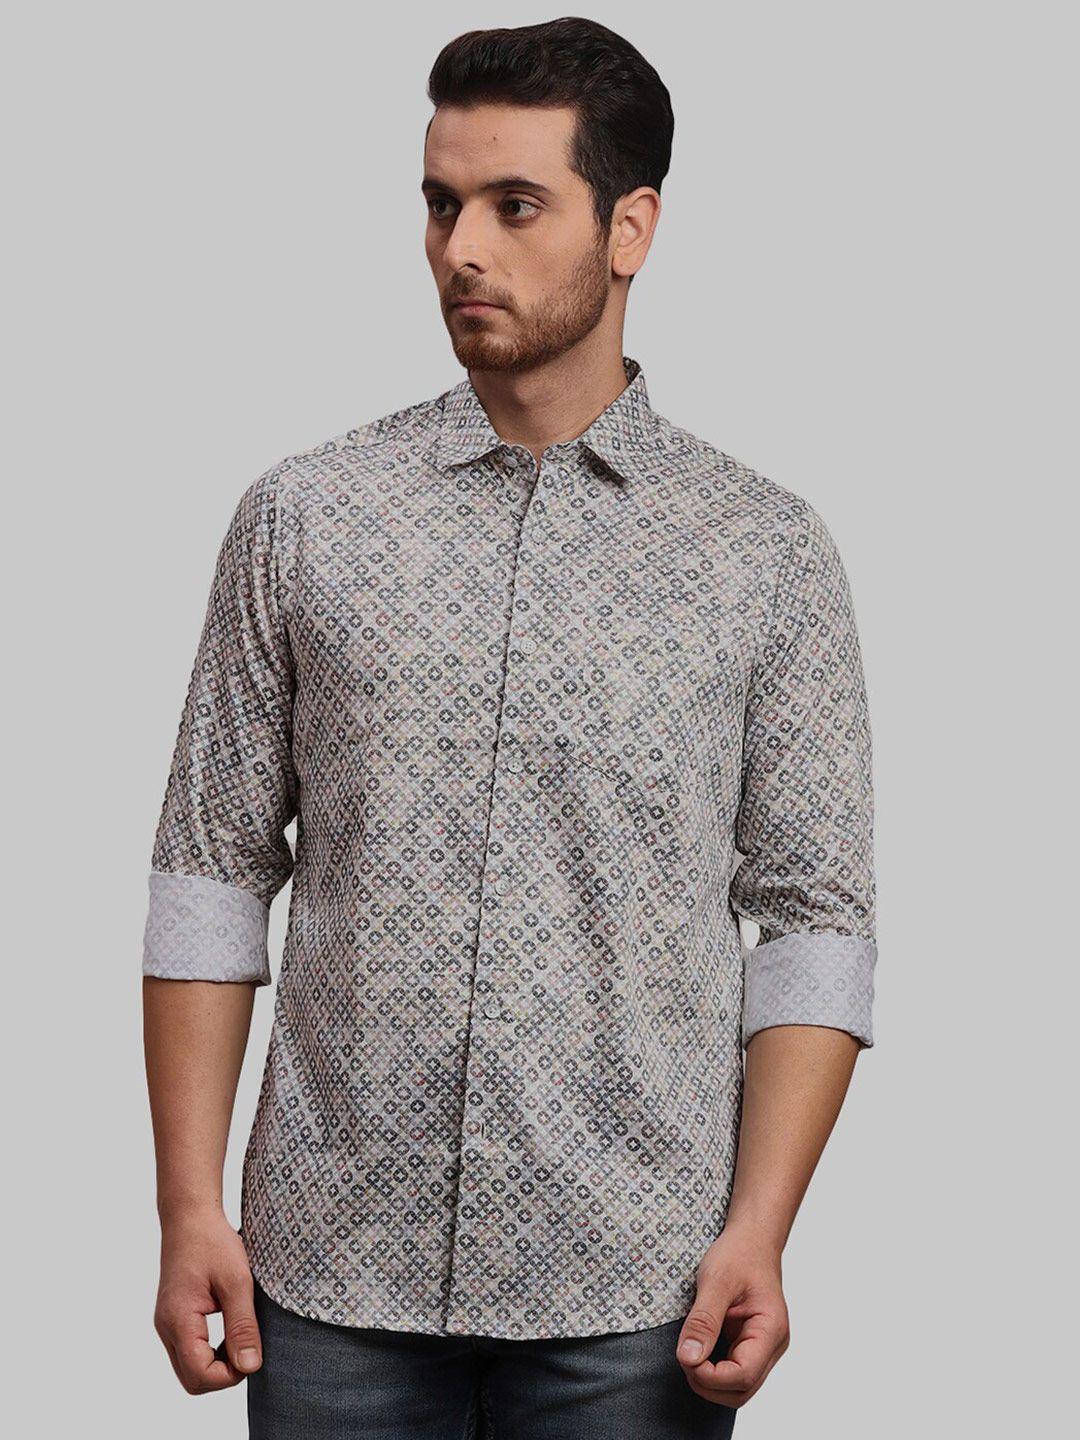 colorplus geometric printed cotton formal shirt